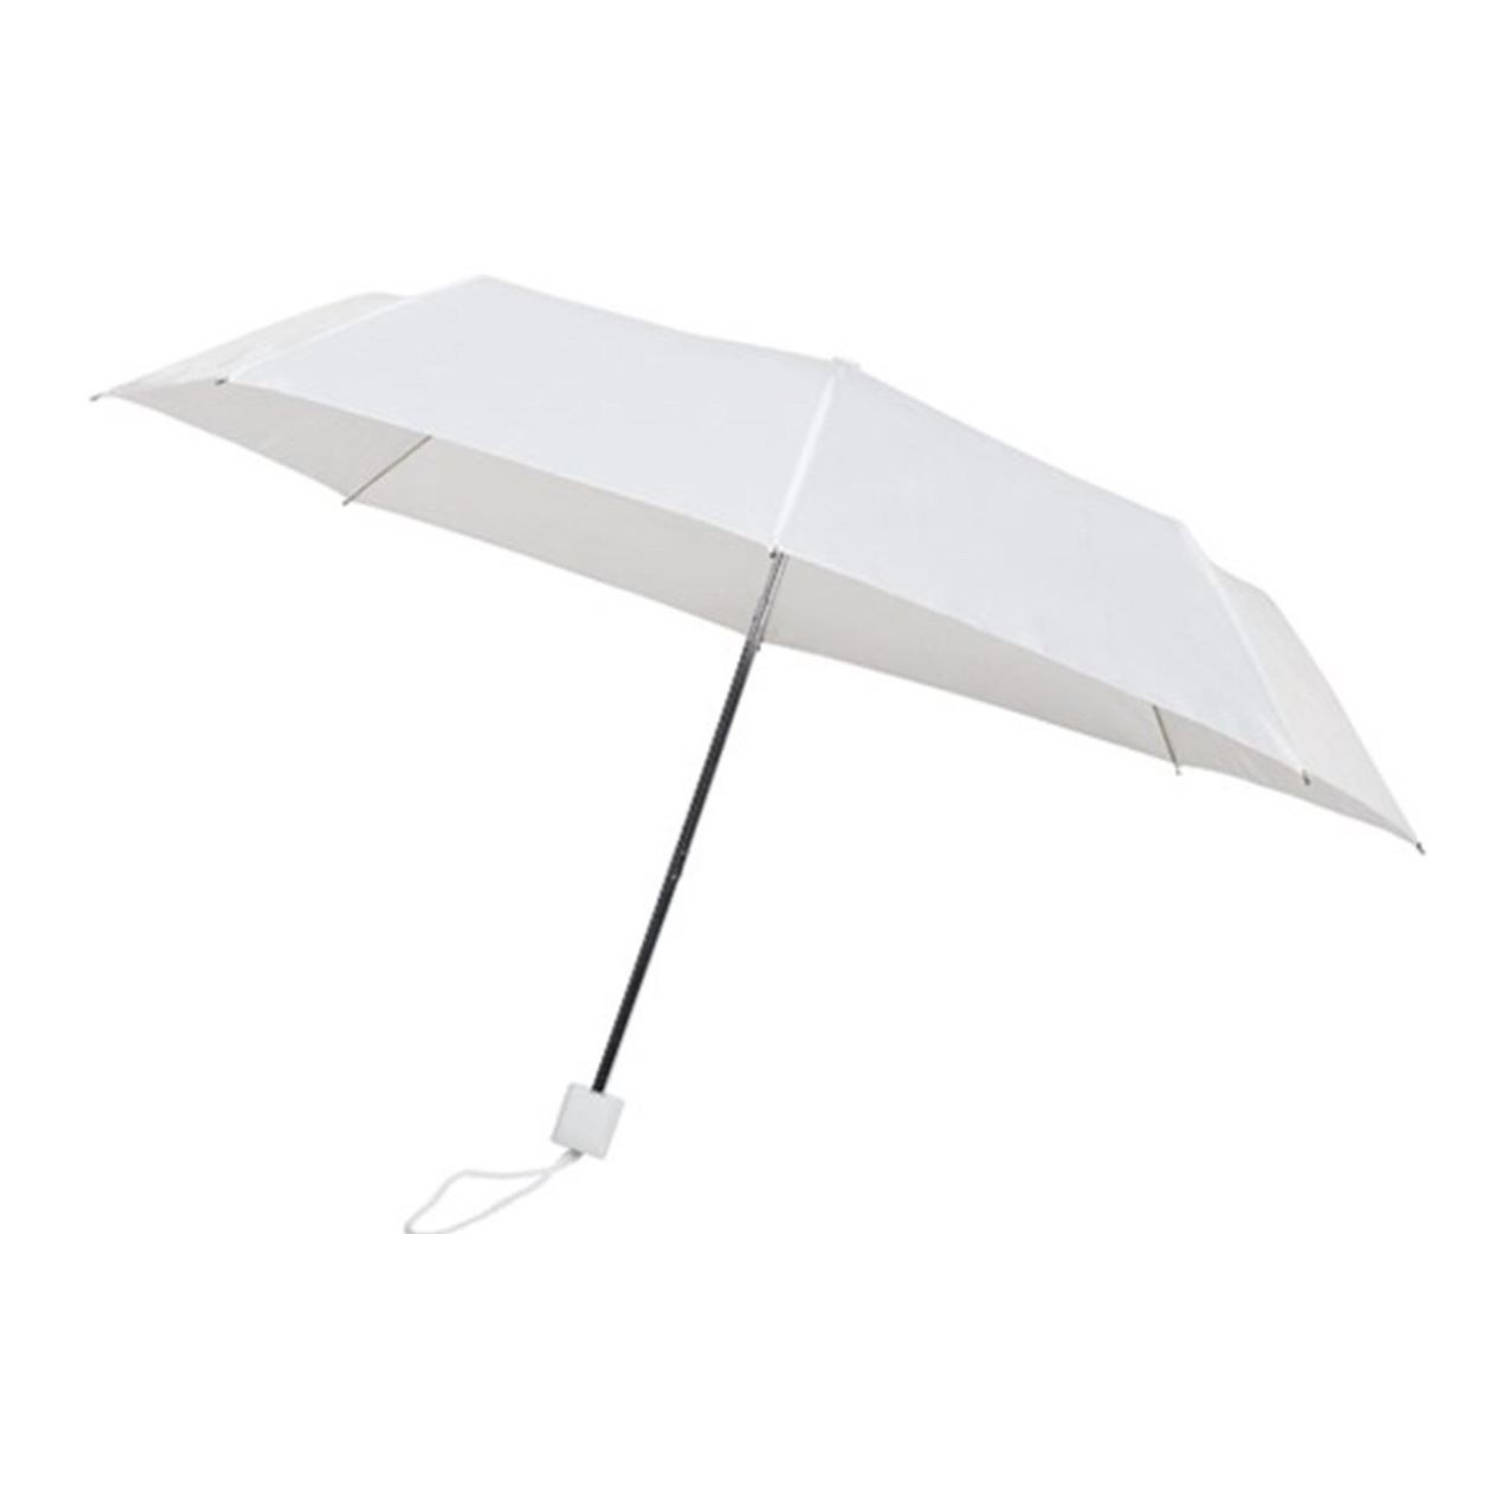 Opvouwbaar paraplu - handopening paraplu - Stevig paraplu met diameter van 100 cm - Wit